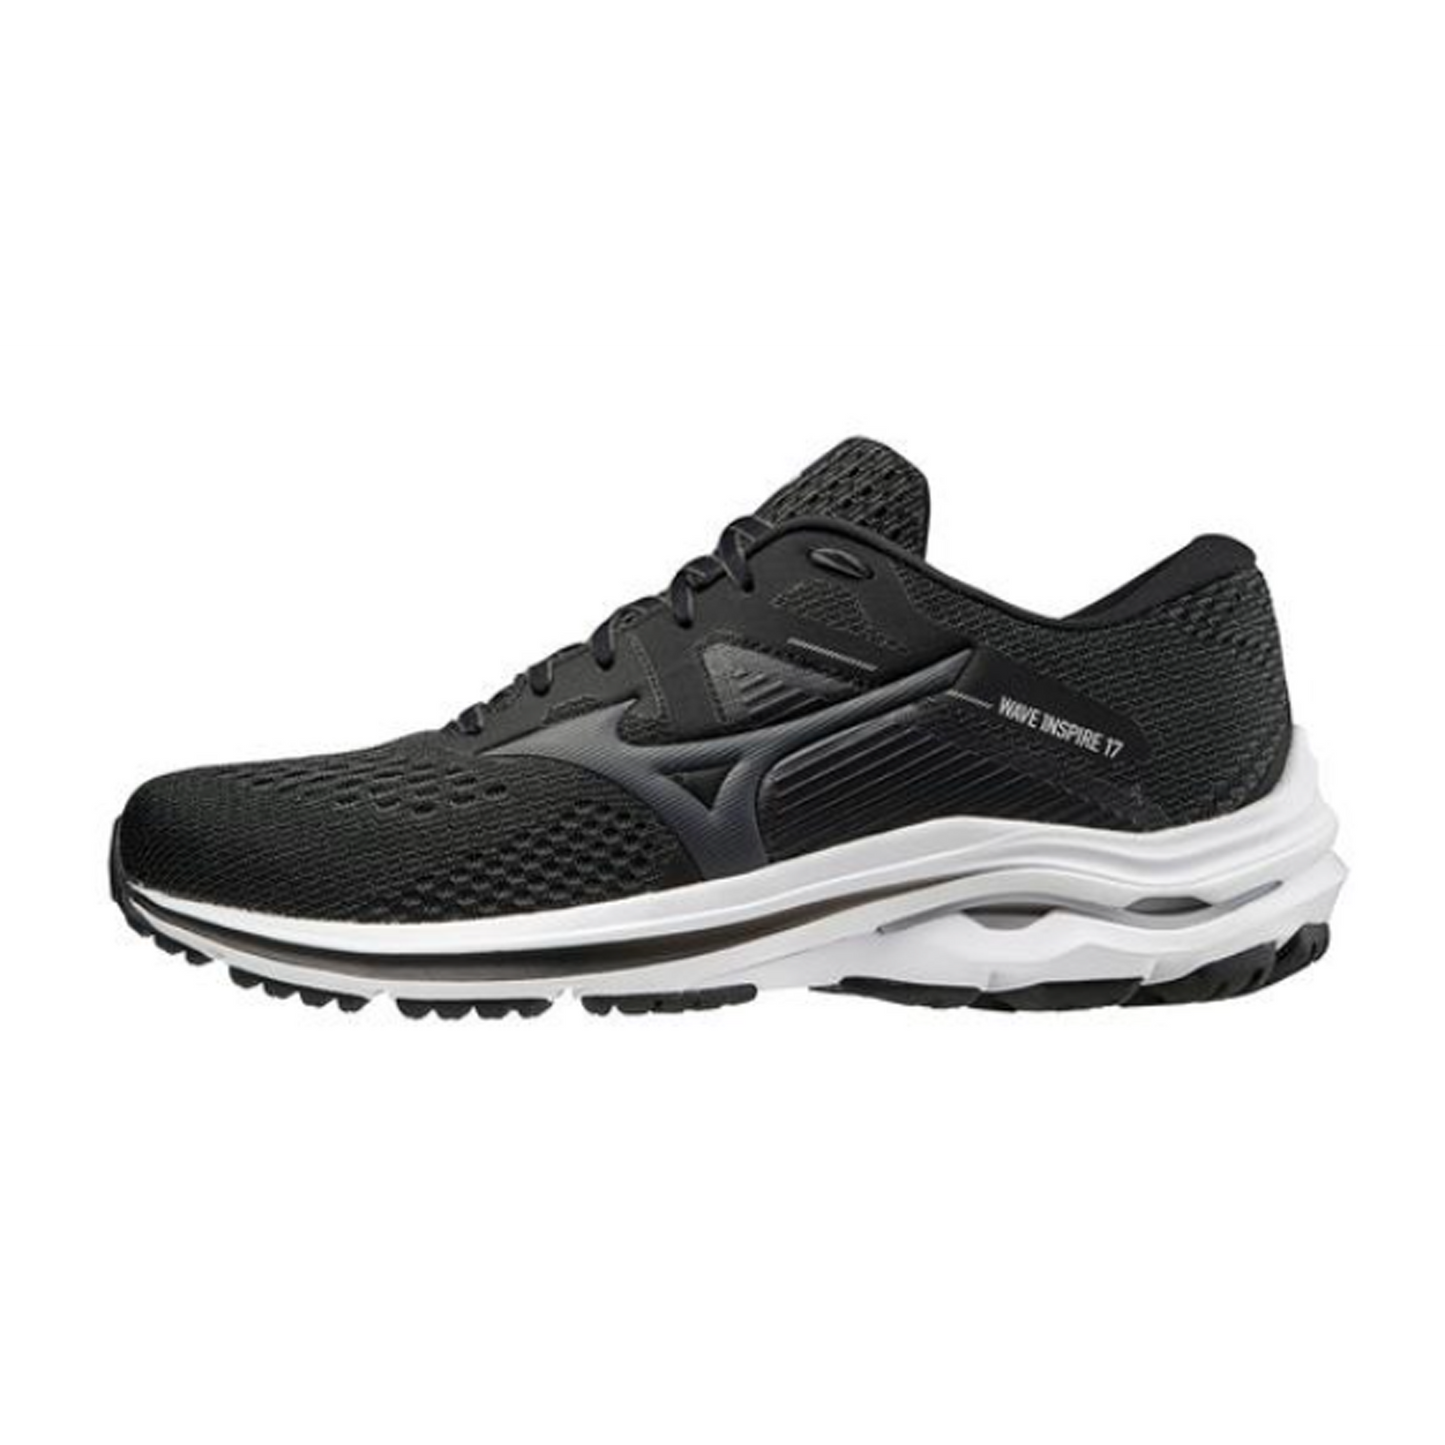 Men's Mizuno Wave Inspire 17 running shoe in colour black.